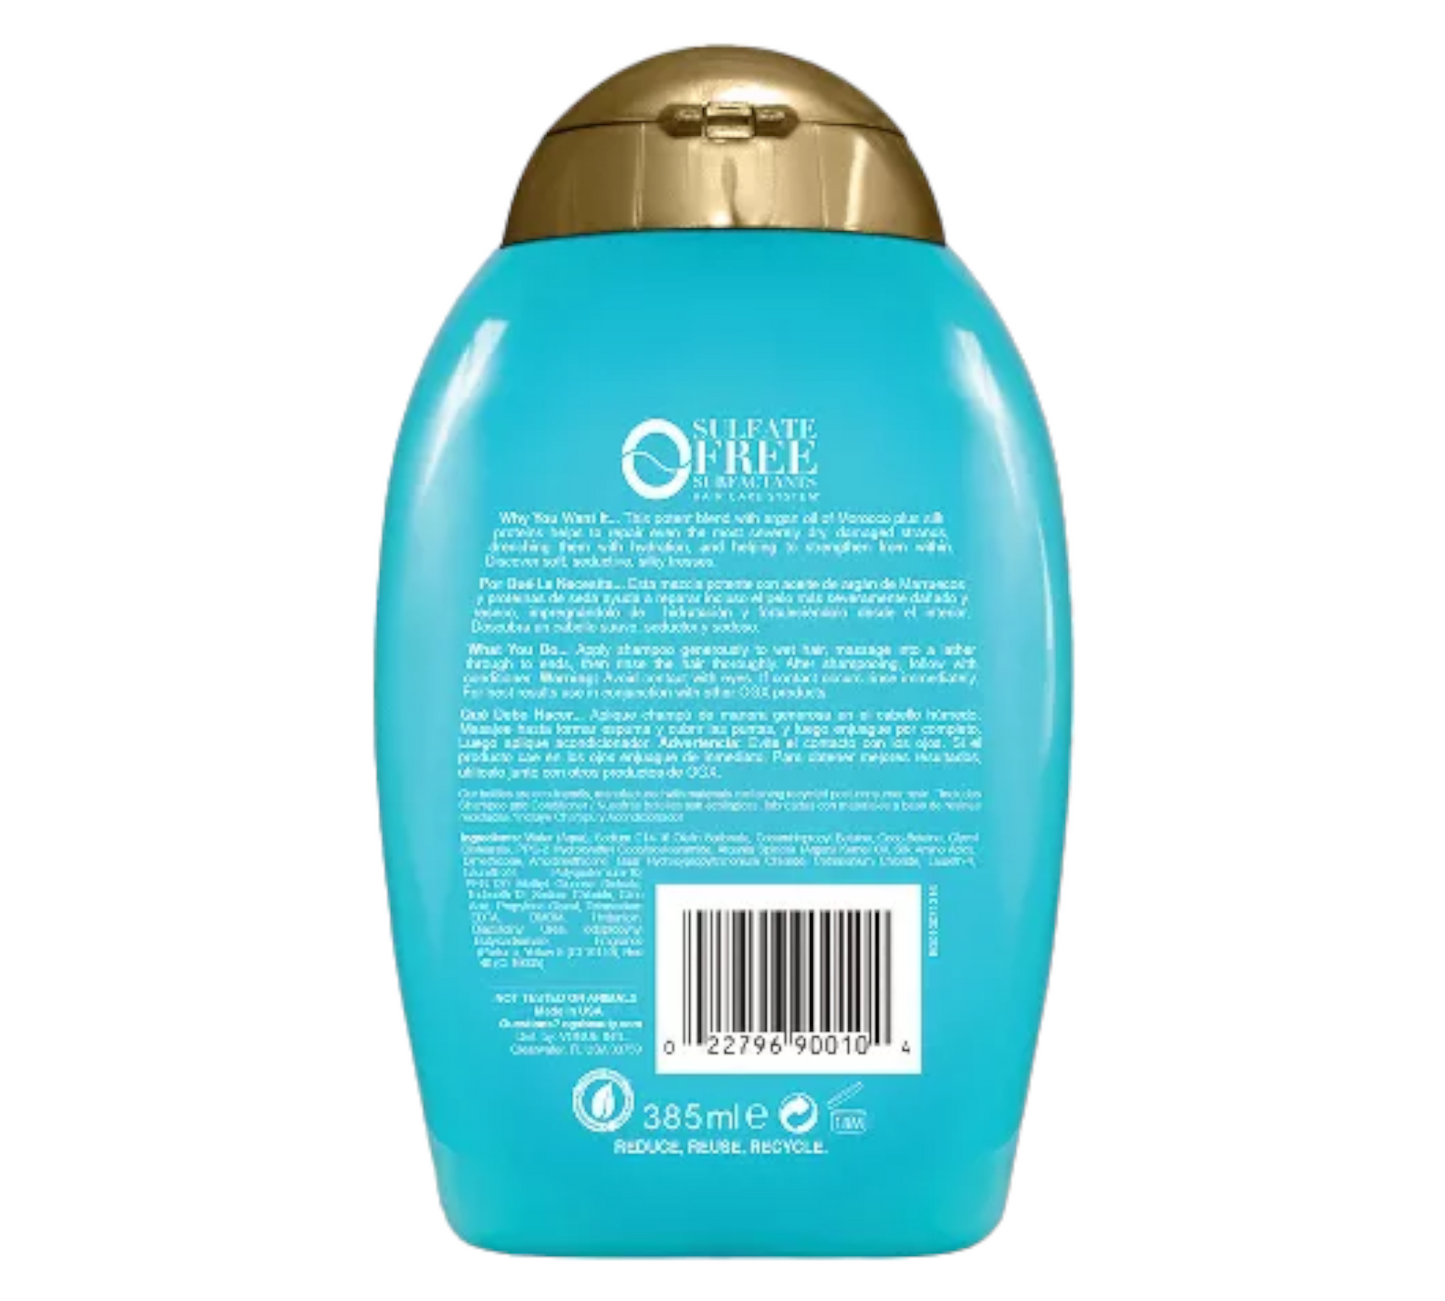 OGX Hydrate & Repair + Argan Oil of Morocco Extra Strength Shampoo for Dry, Damaged Hair - 13 fl oz